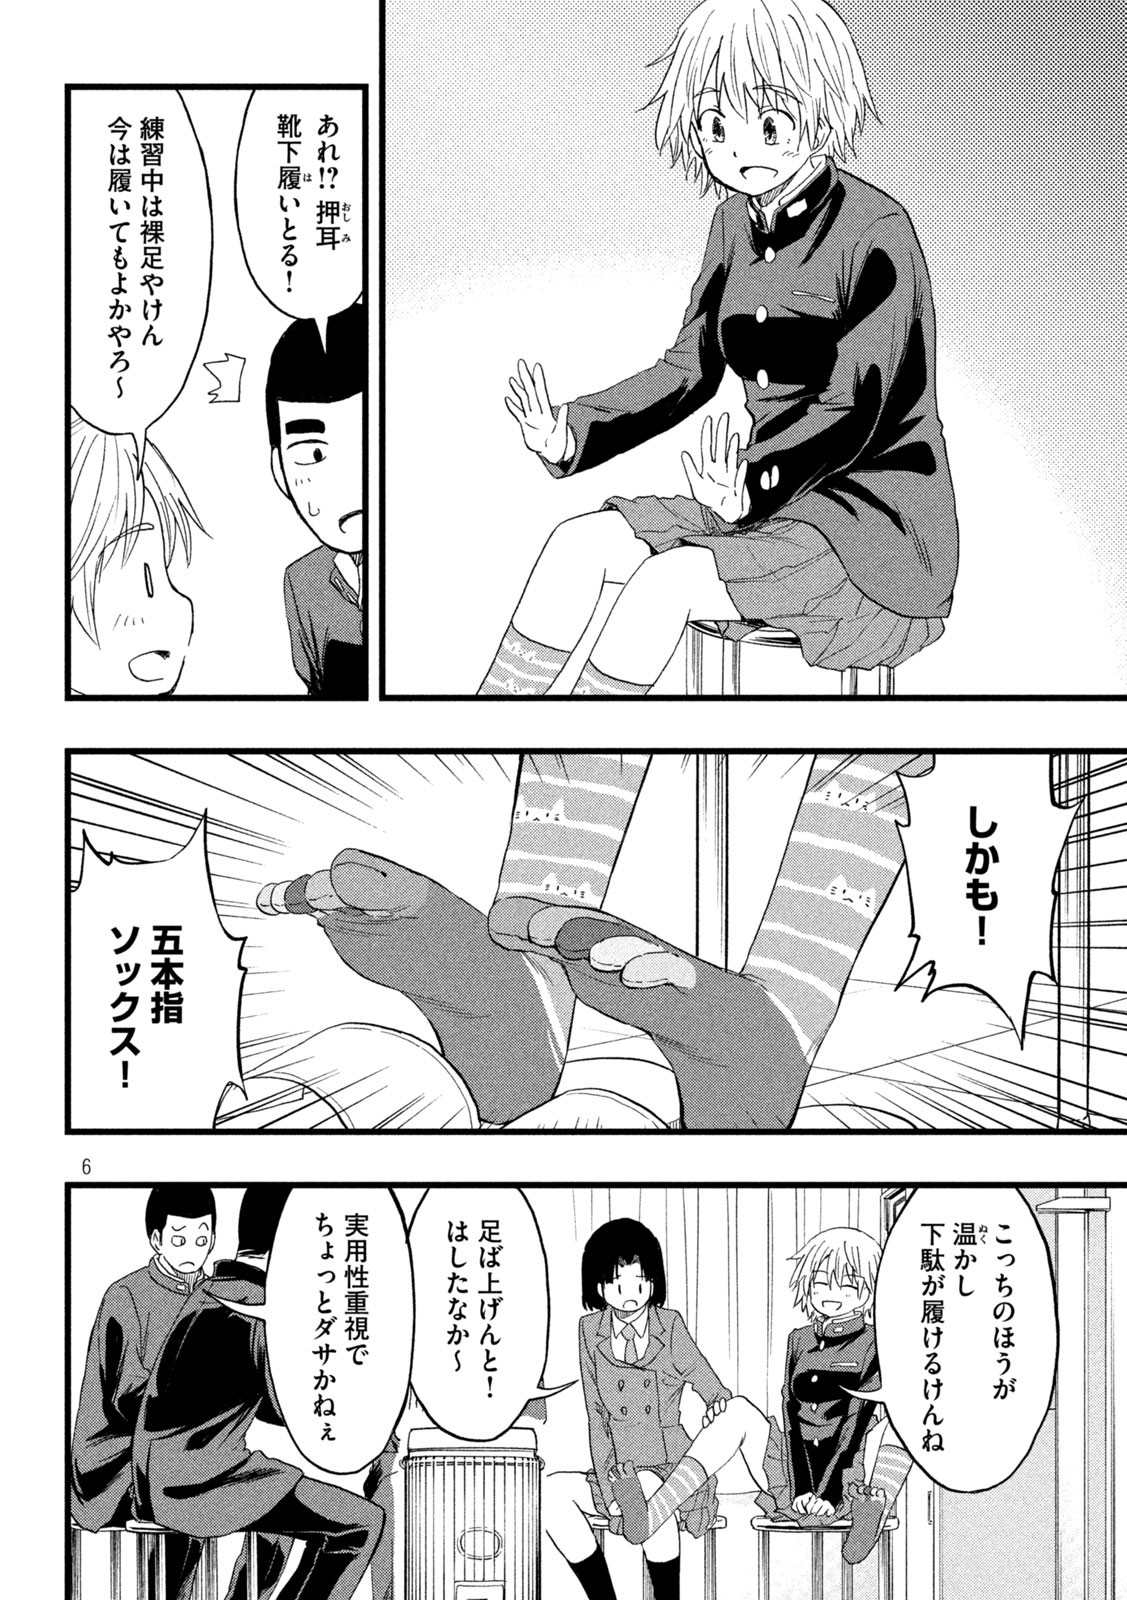 Koharu haru! - Chapter 71 - Page 2